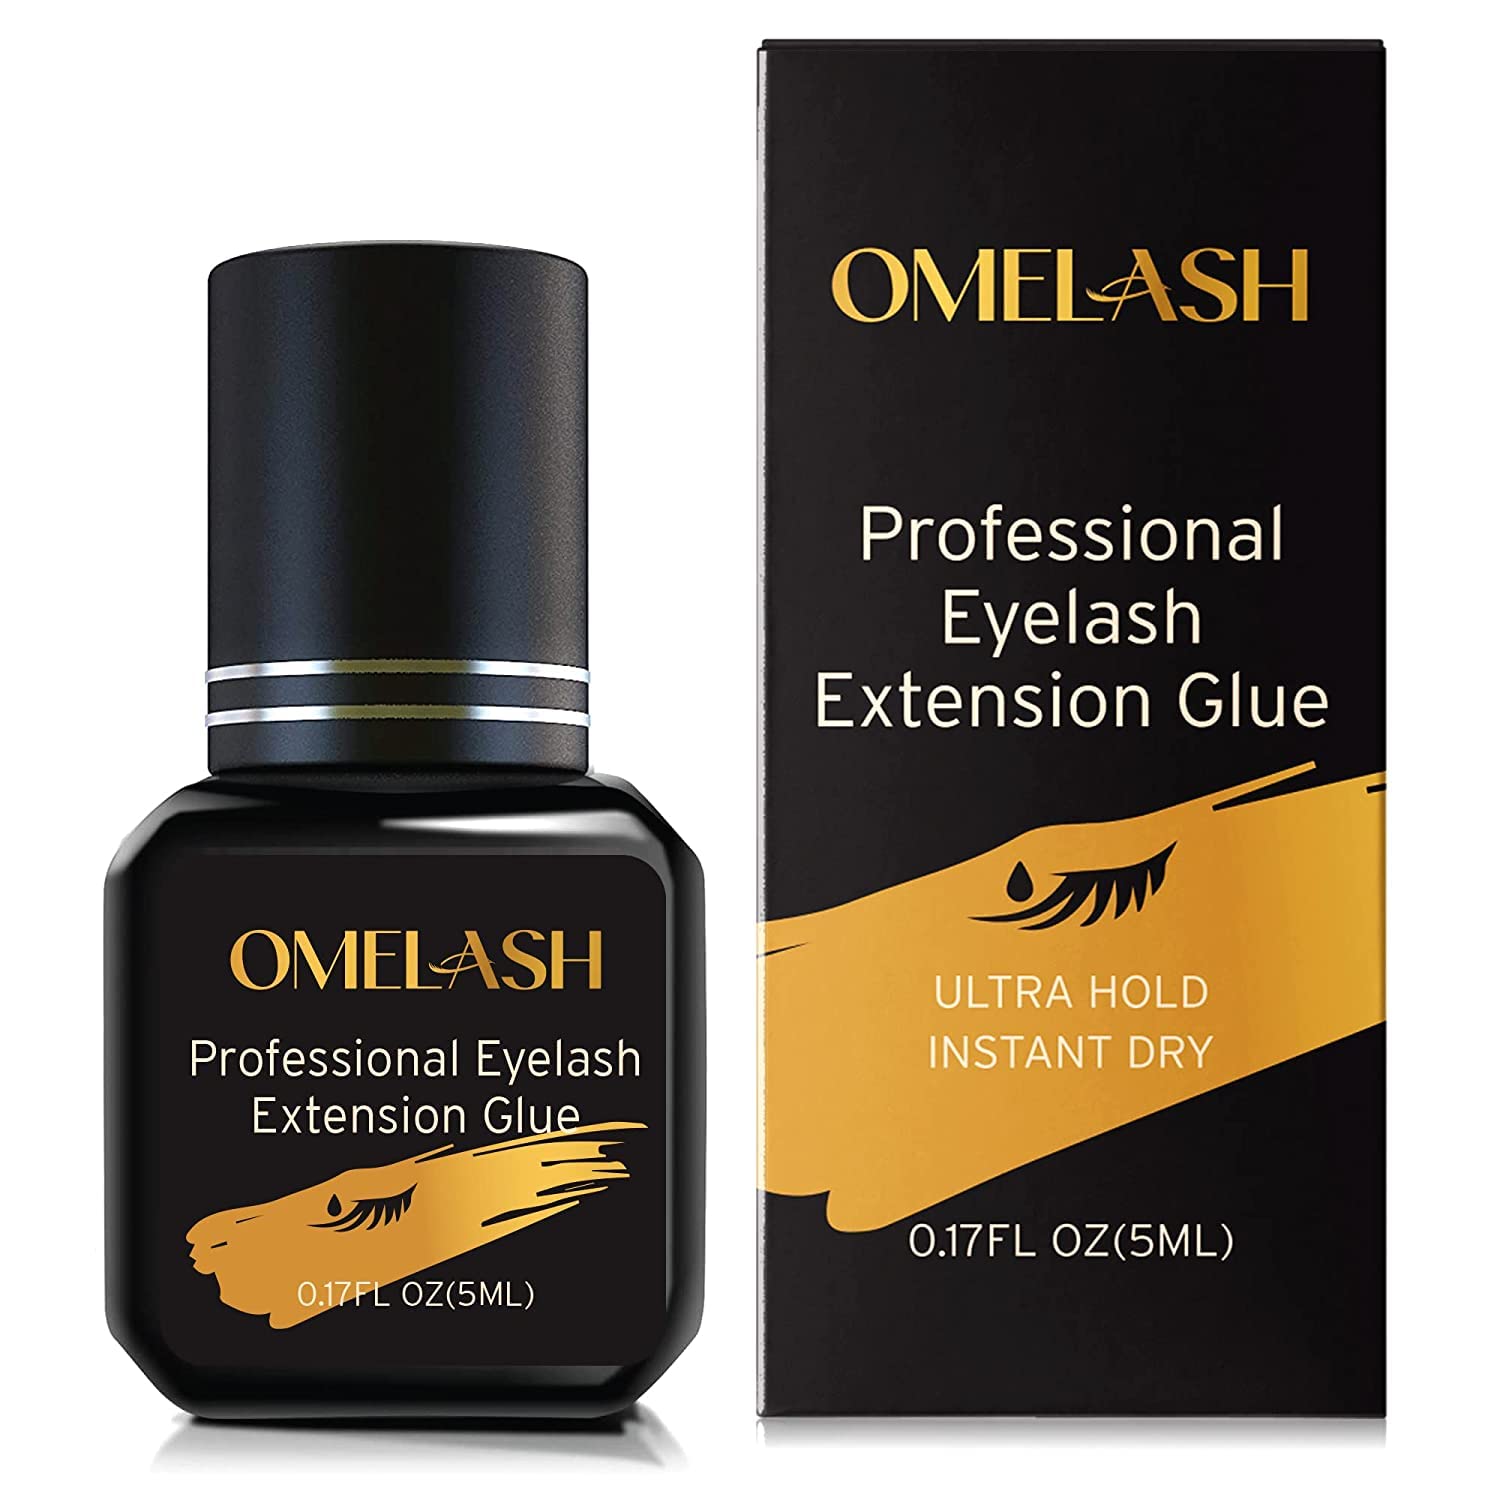 What Breaks Down Eyelash Extension Glue